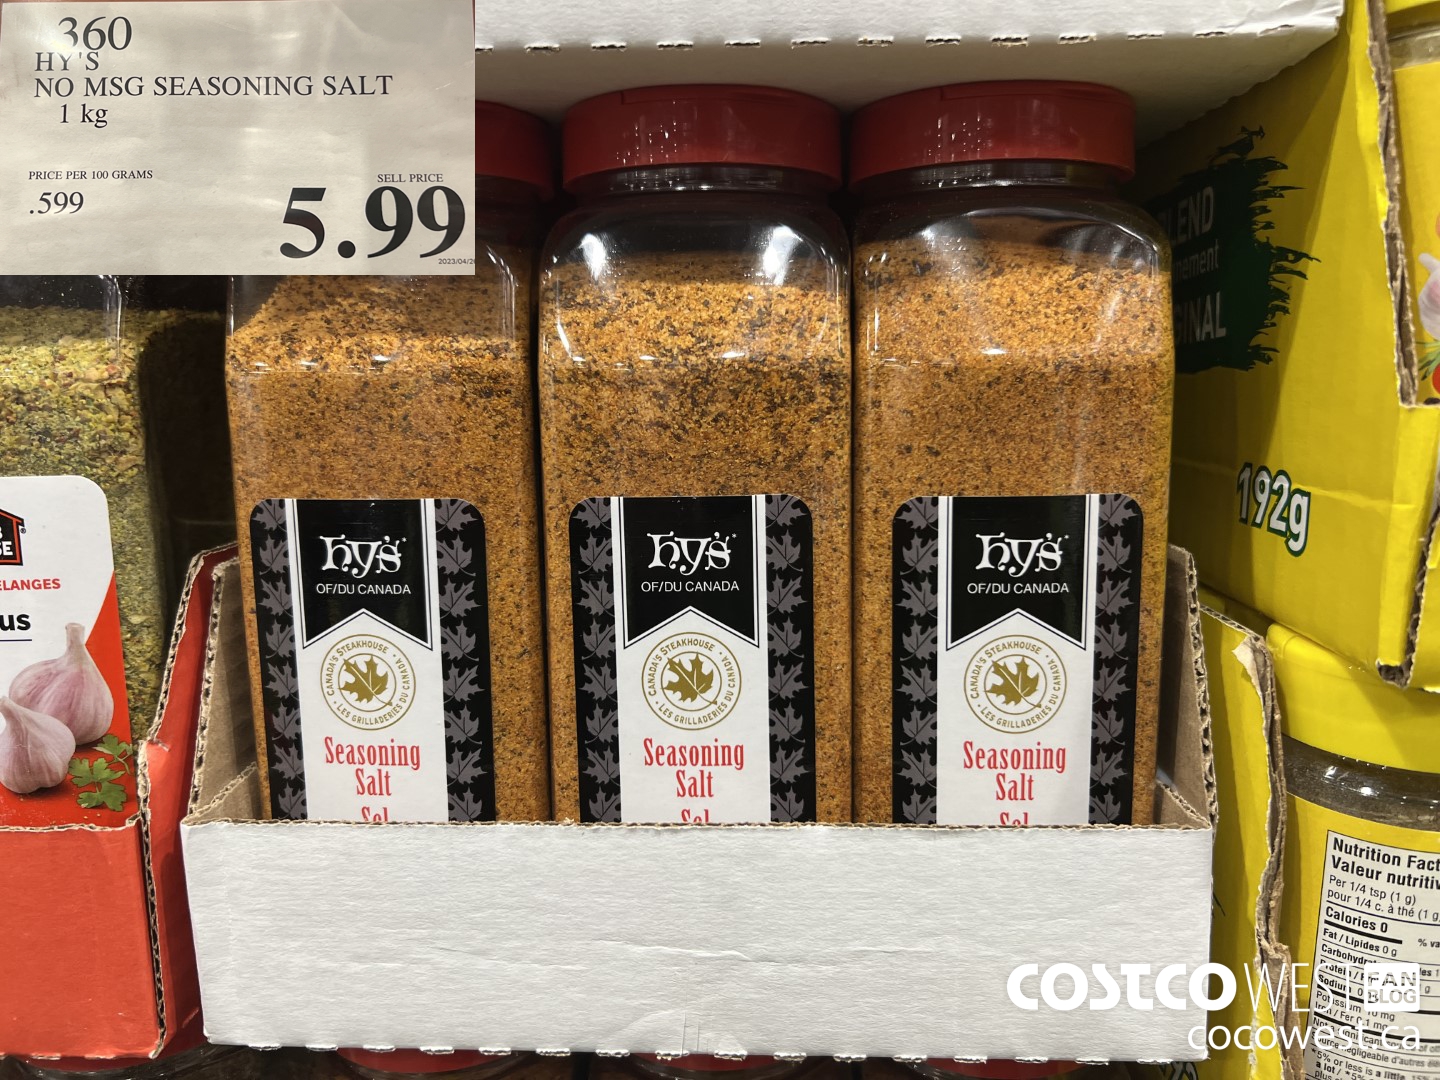 Costco Hy's Seasoning Salt Review - Costcuisine